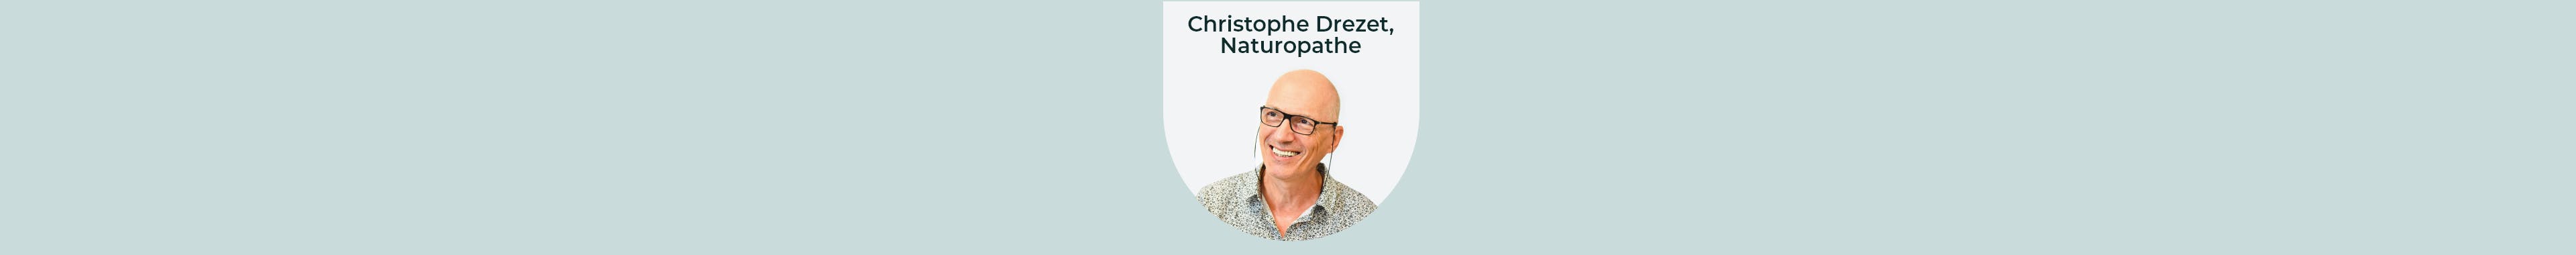 Christophe Drezet, naturopathe